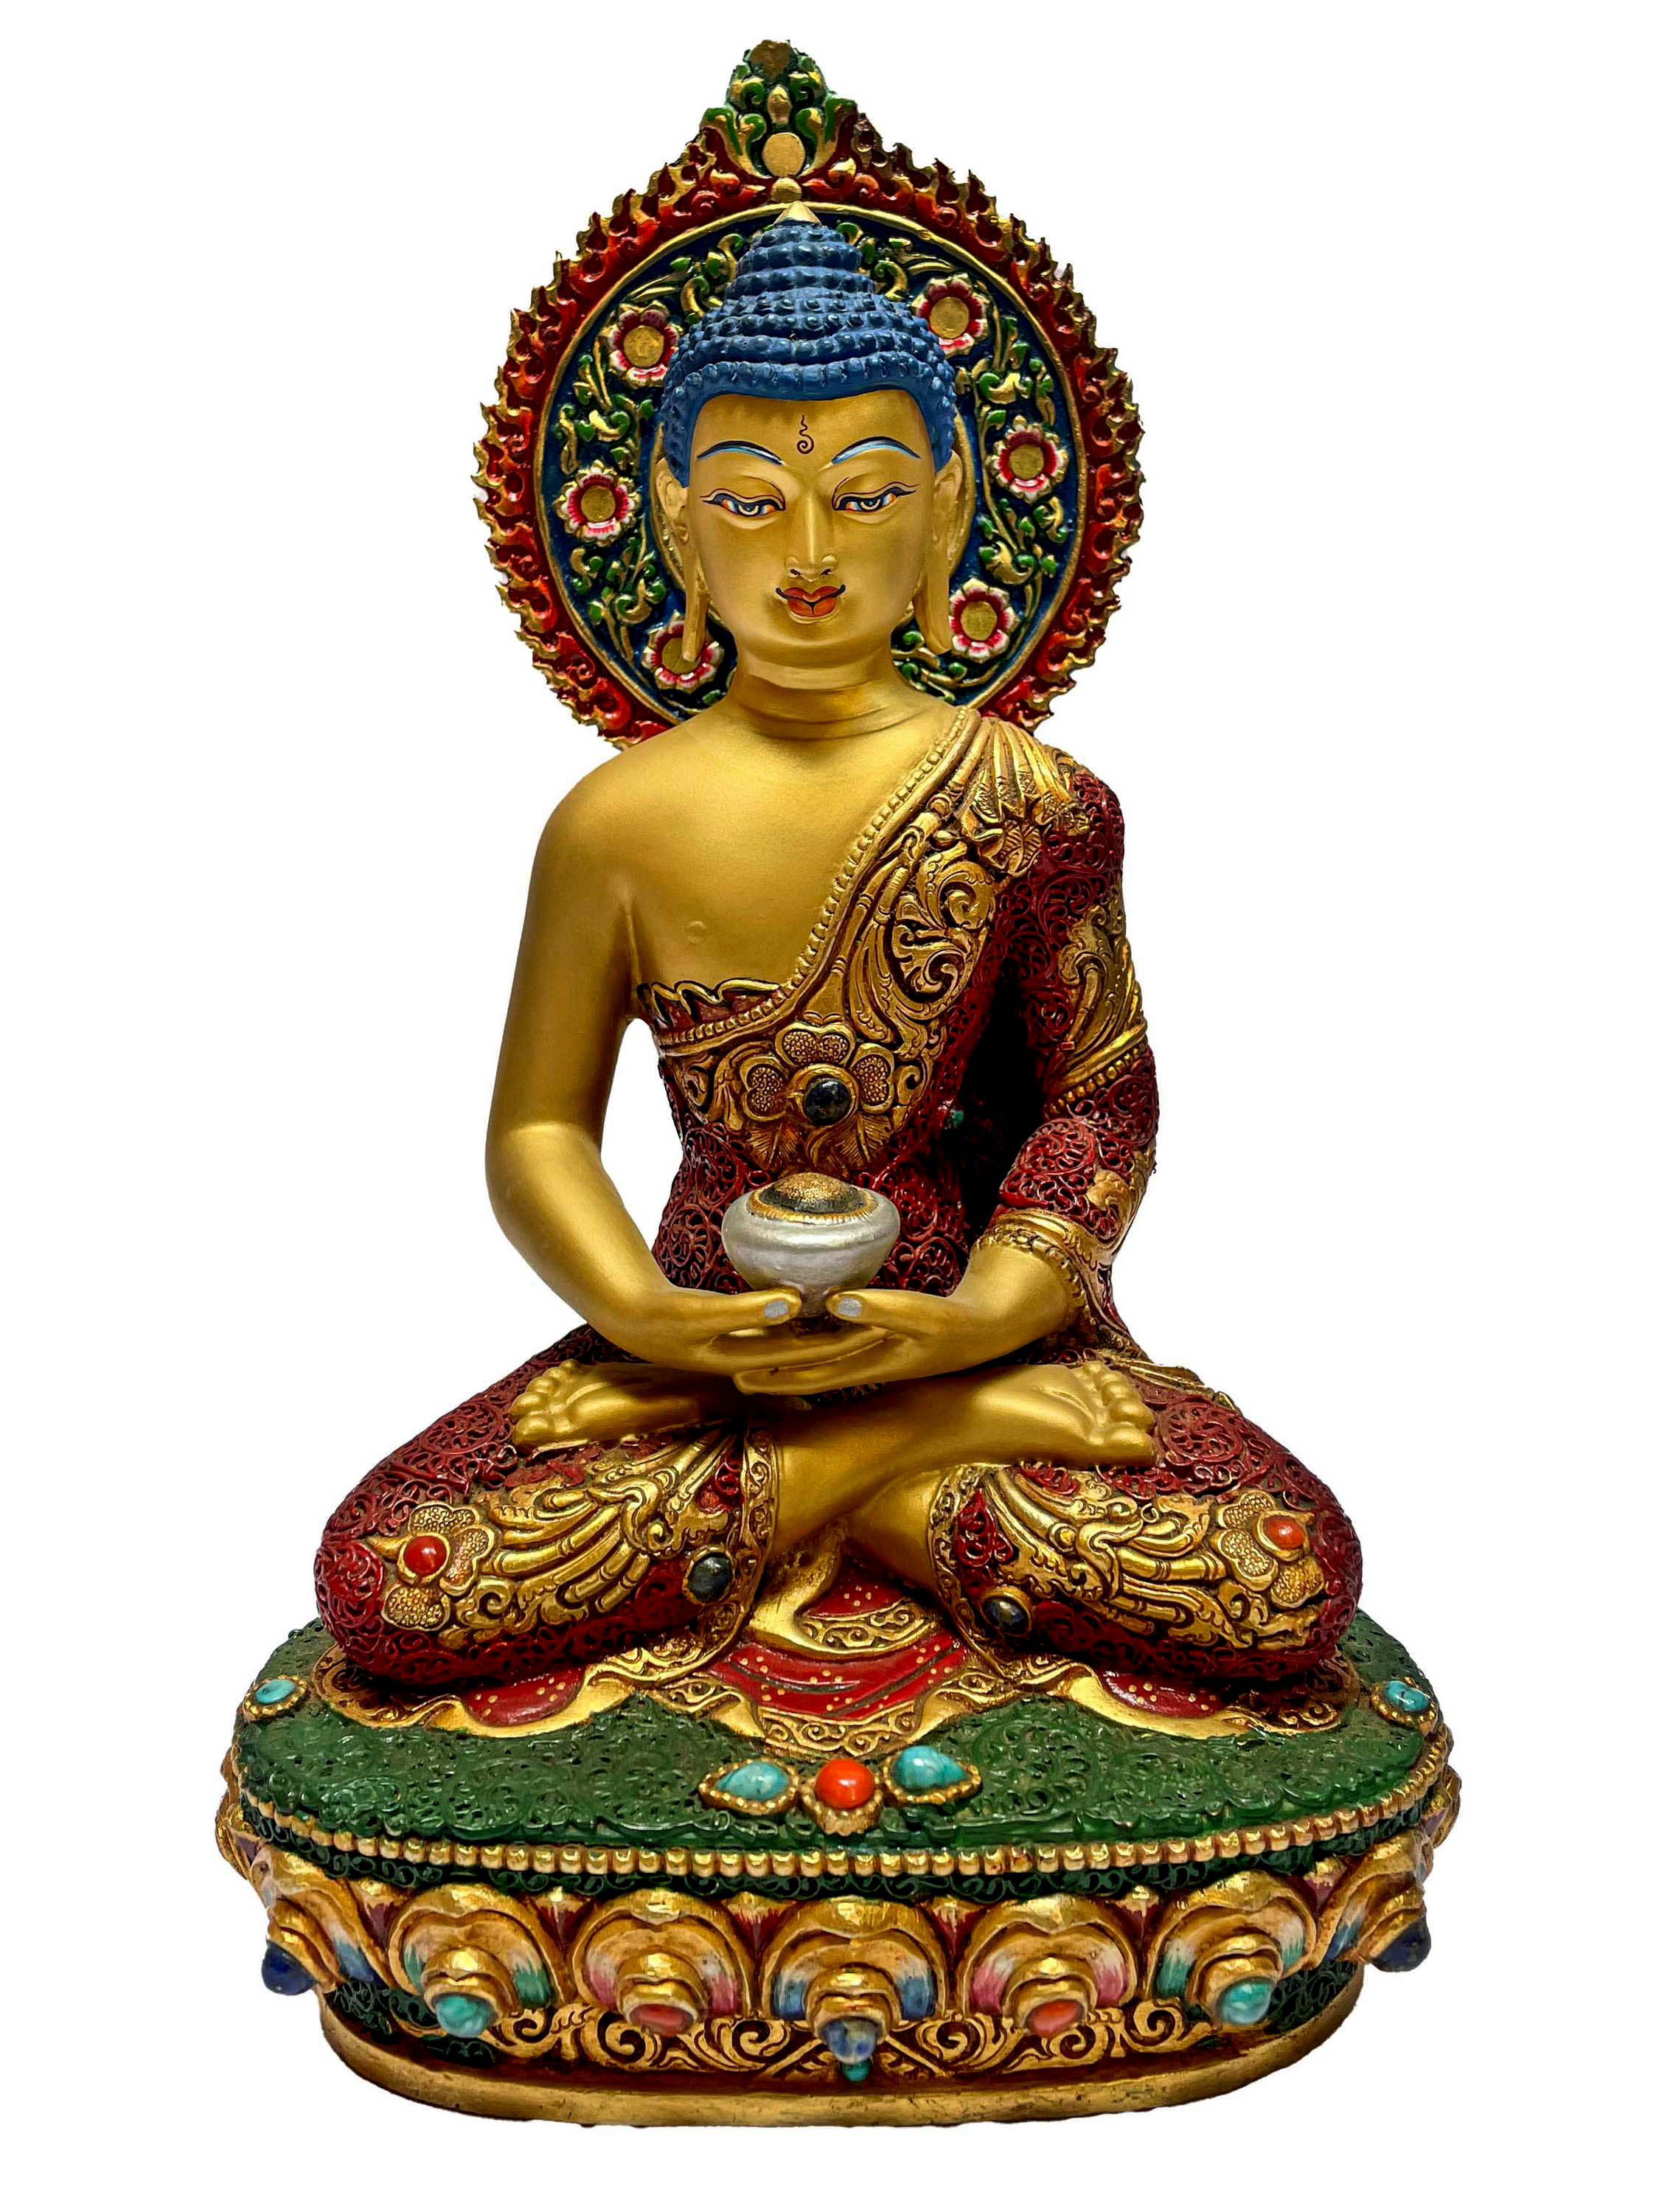 Handmade Dhyana Mudra Buddha Statue Gautama Sakyamuni Buddha Mindful Gift  Meditation Oriental Decoration and Display 